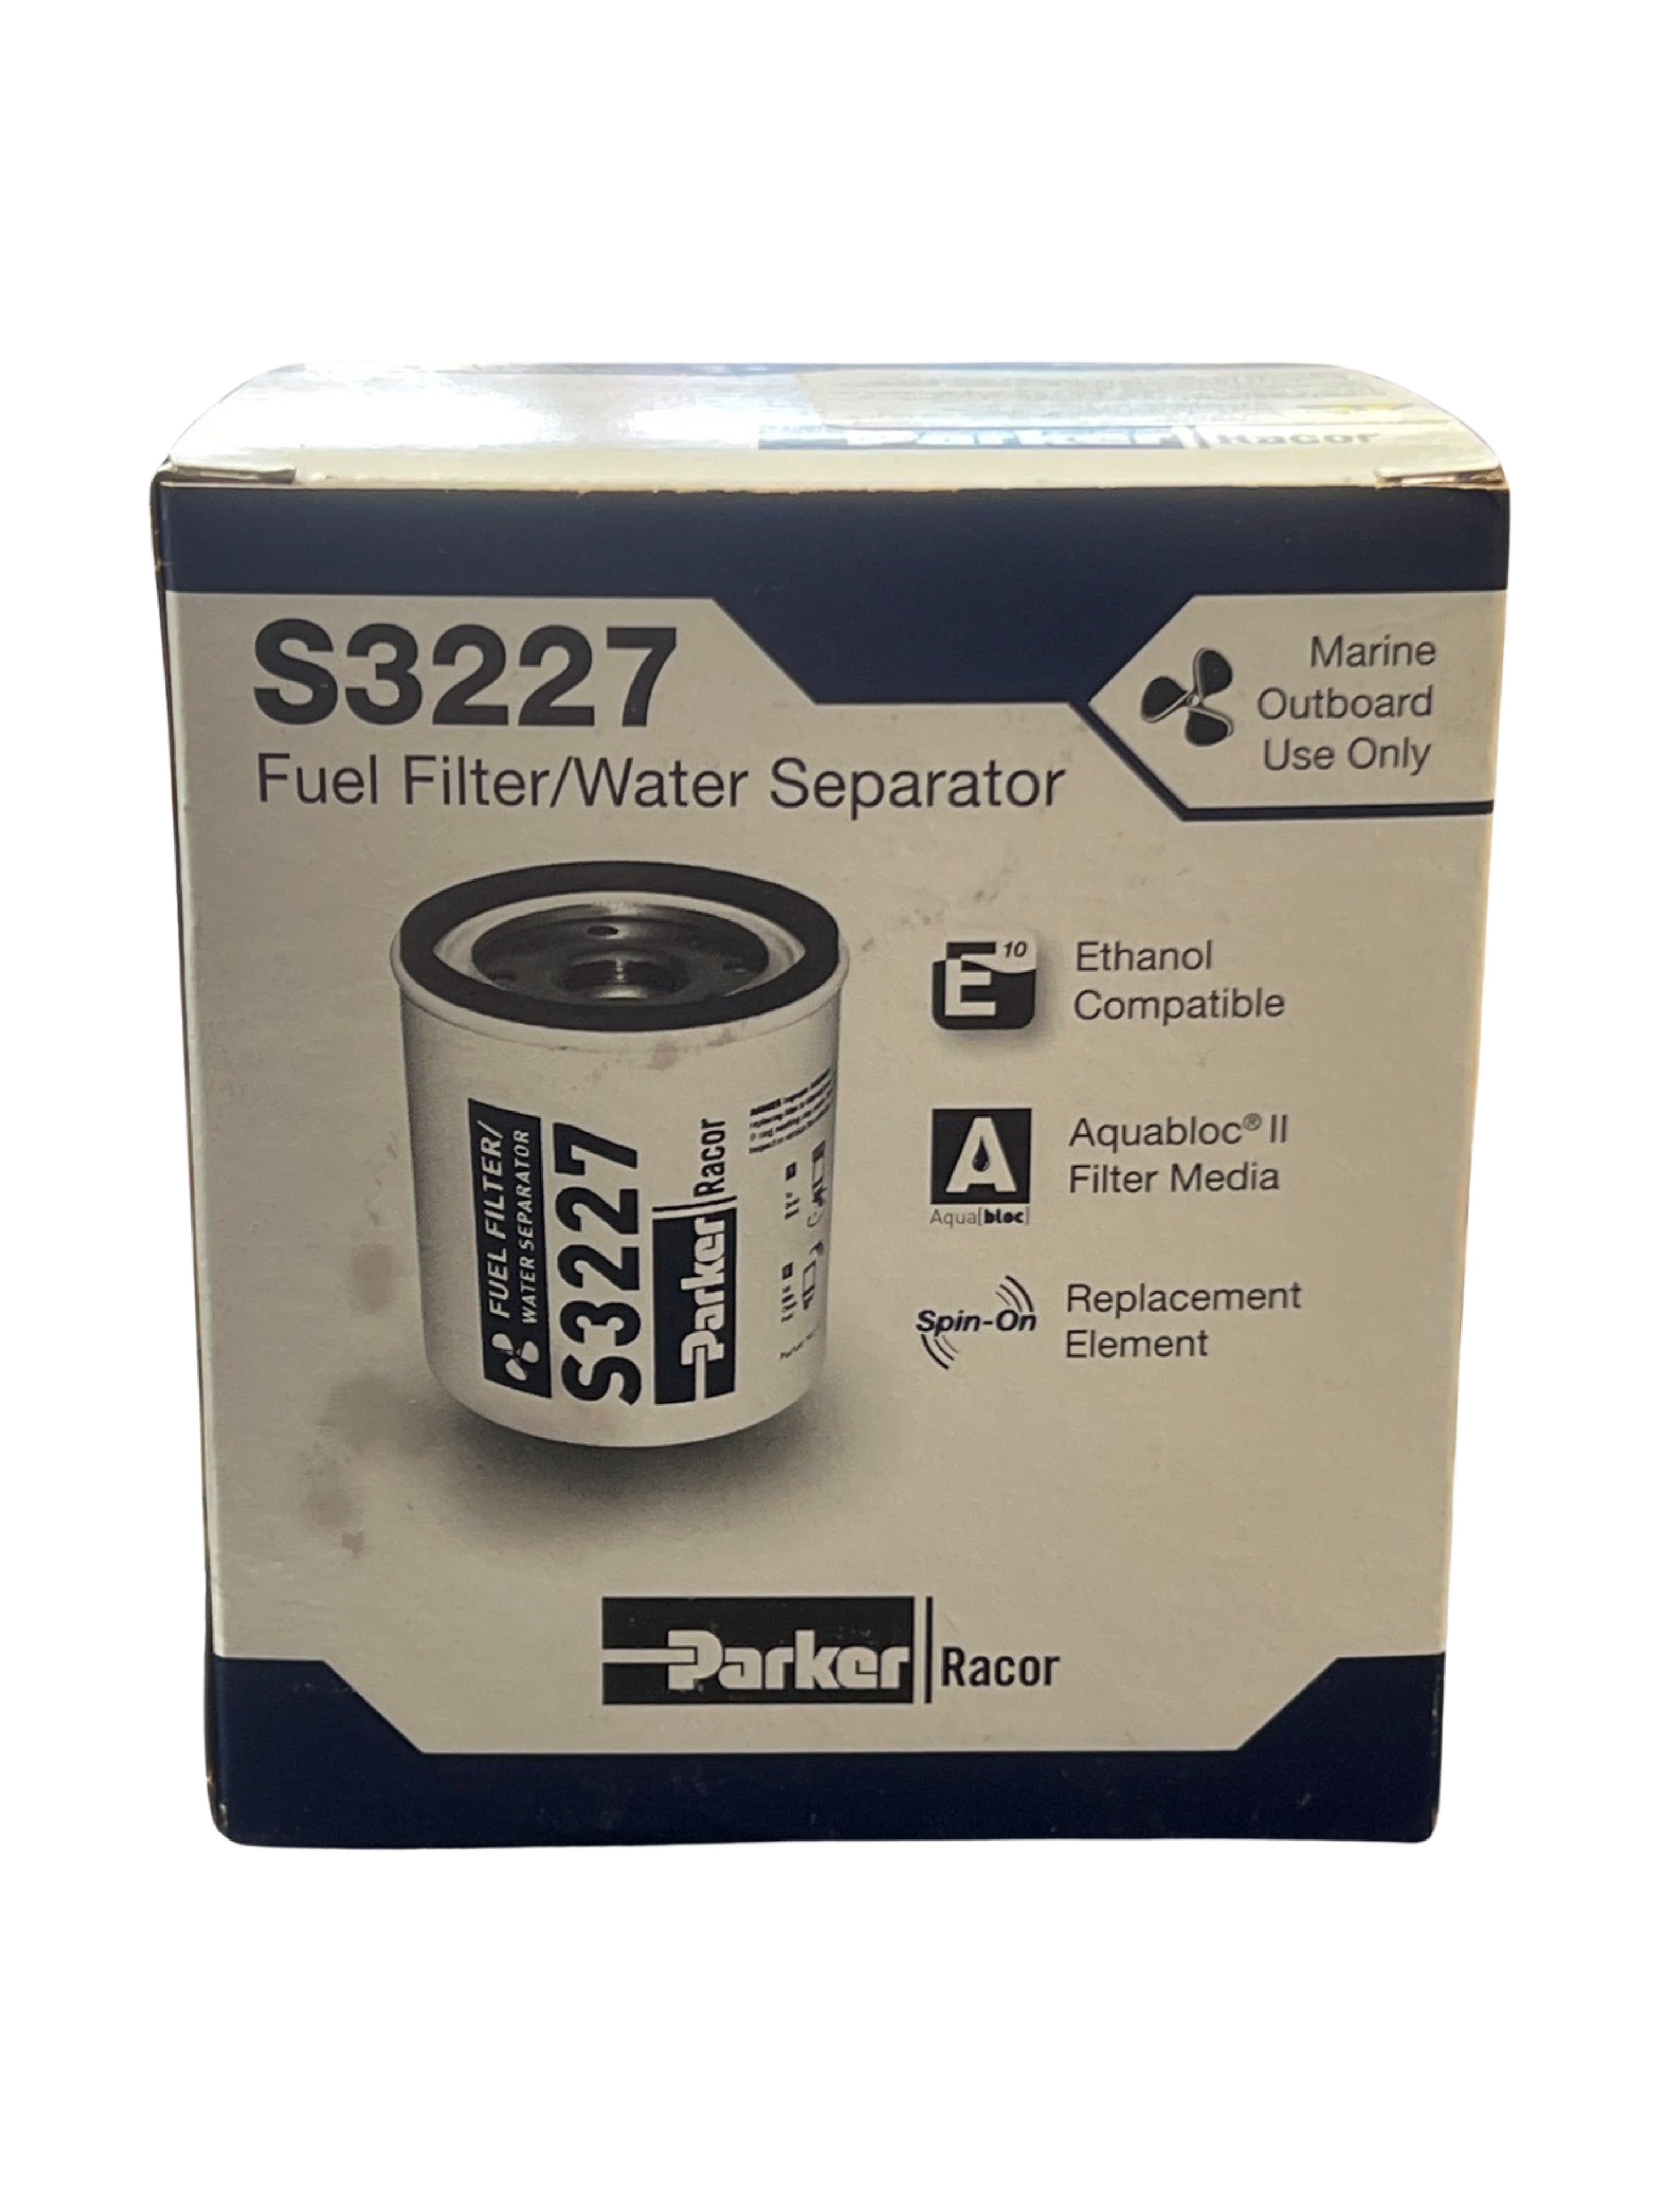 S3227 Fuel Filter/Water Separator